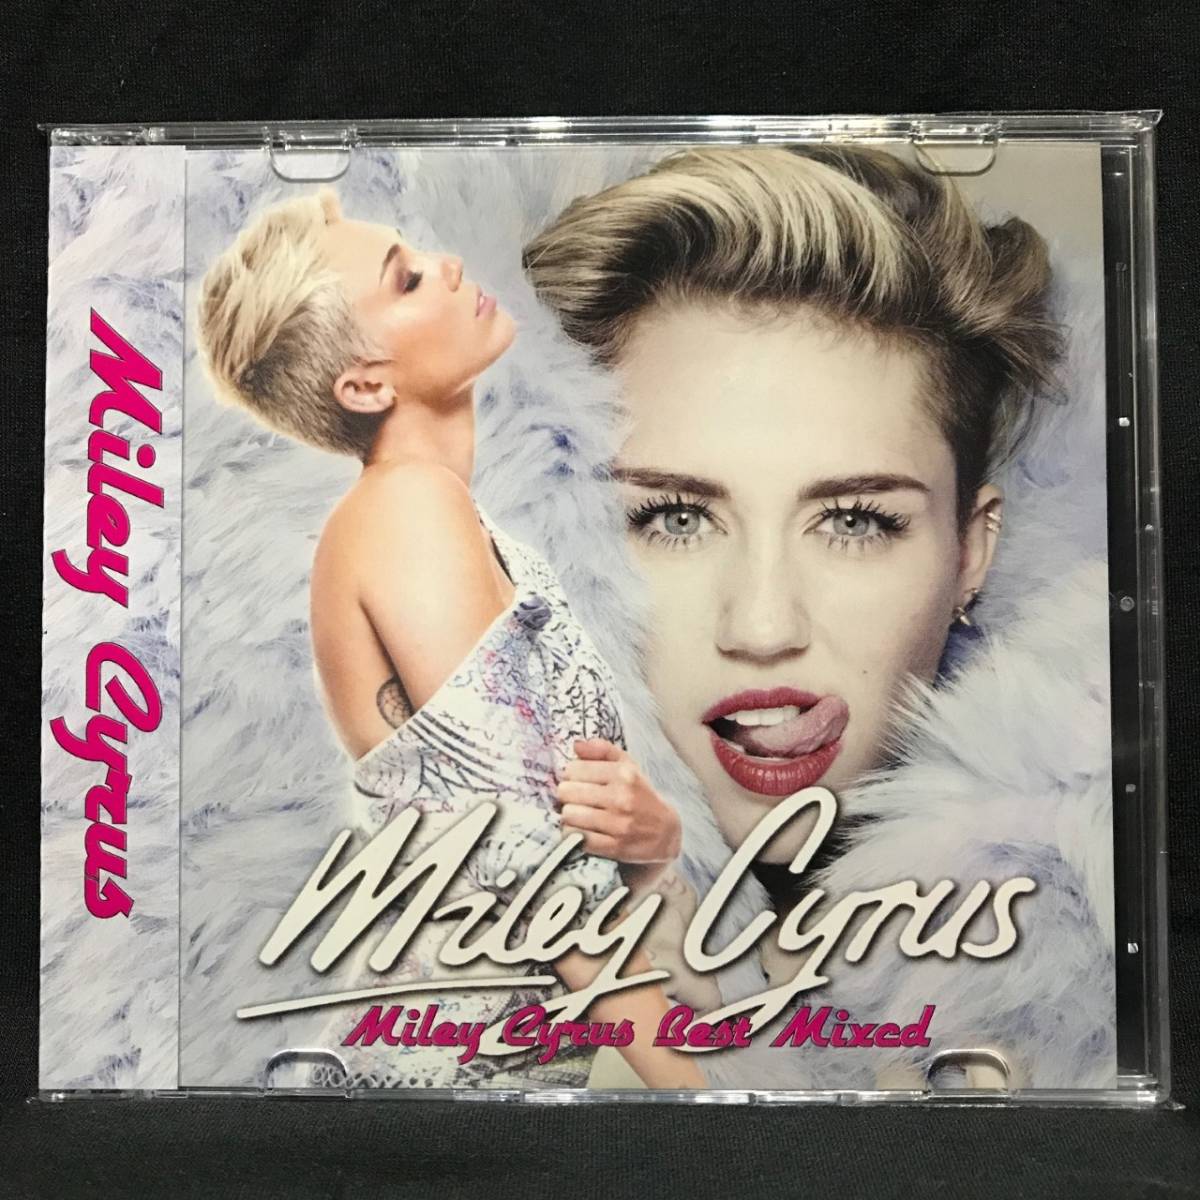 Miley Cyrus Best MixCD マイリー サイラス【28曲収録】新品_画像1